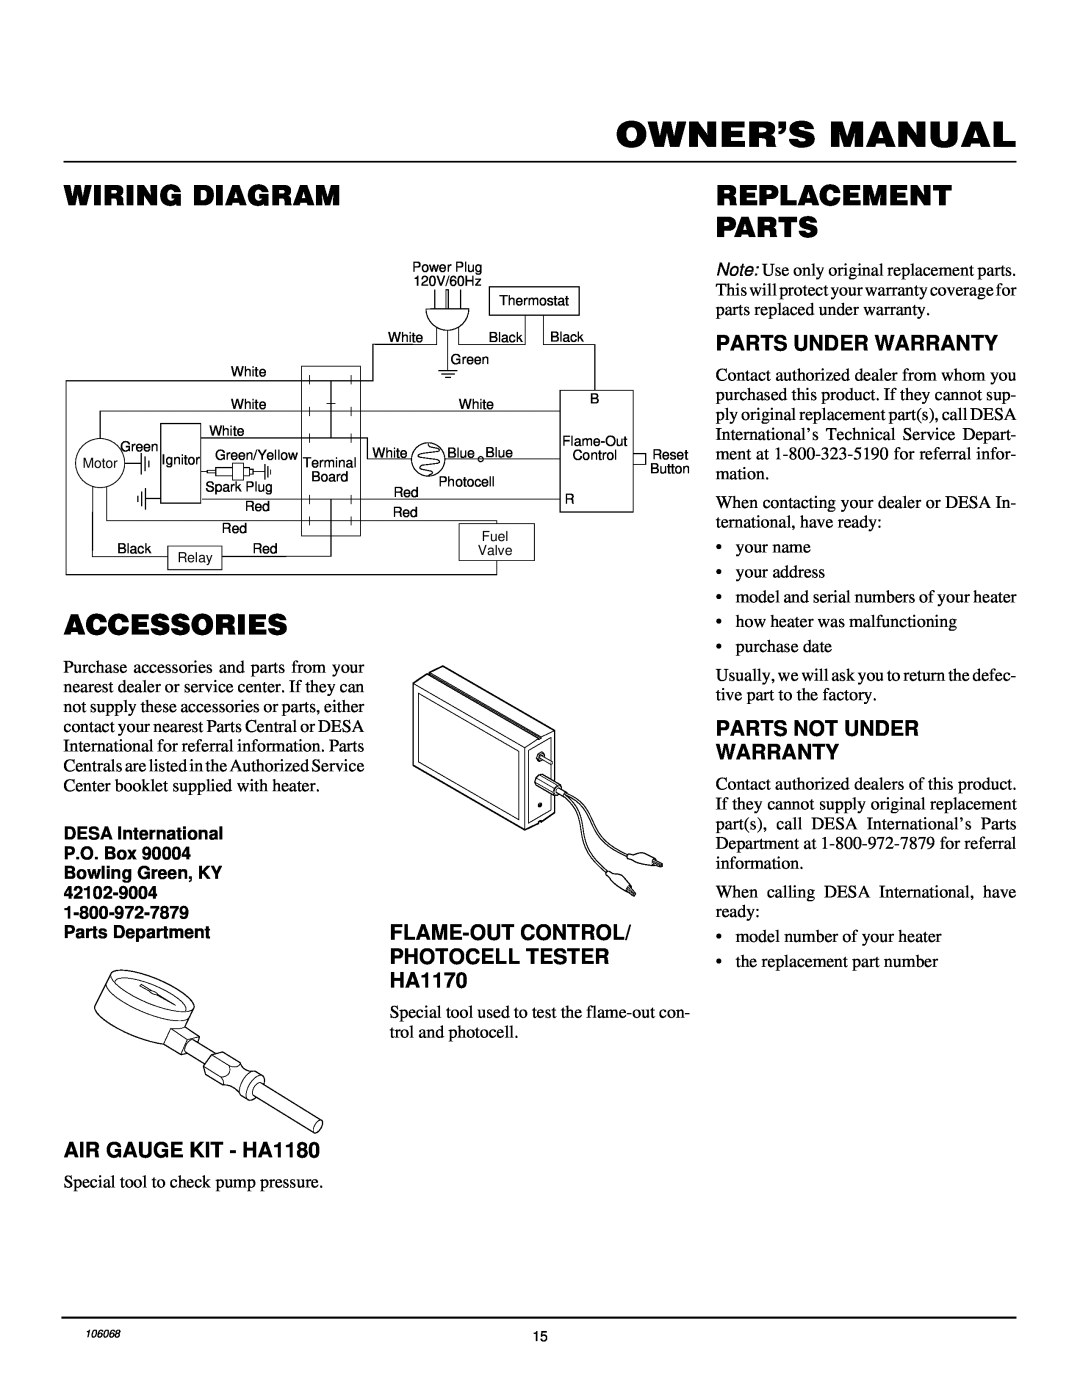 Desa REM200T owner manual Wiring Diagram, Accessories, Replacement Parts, Parts Under Warranty, Parts Not Under Warranty 